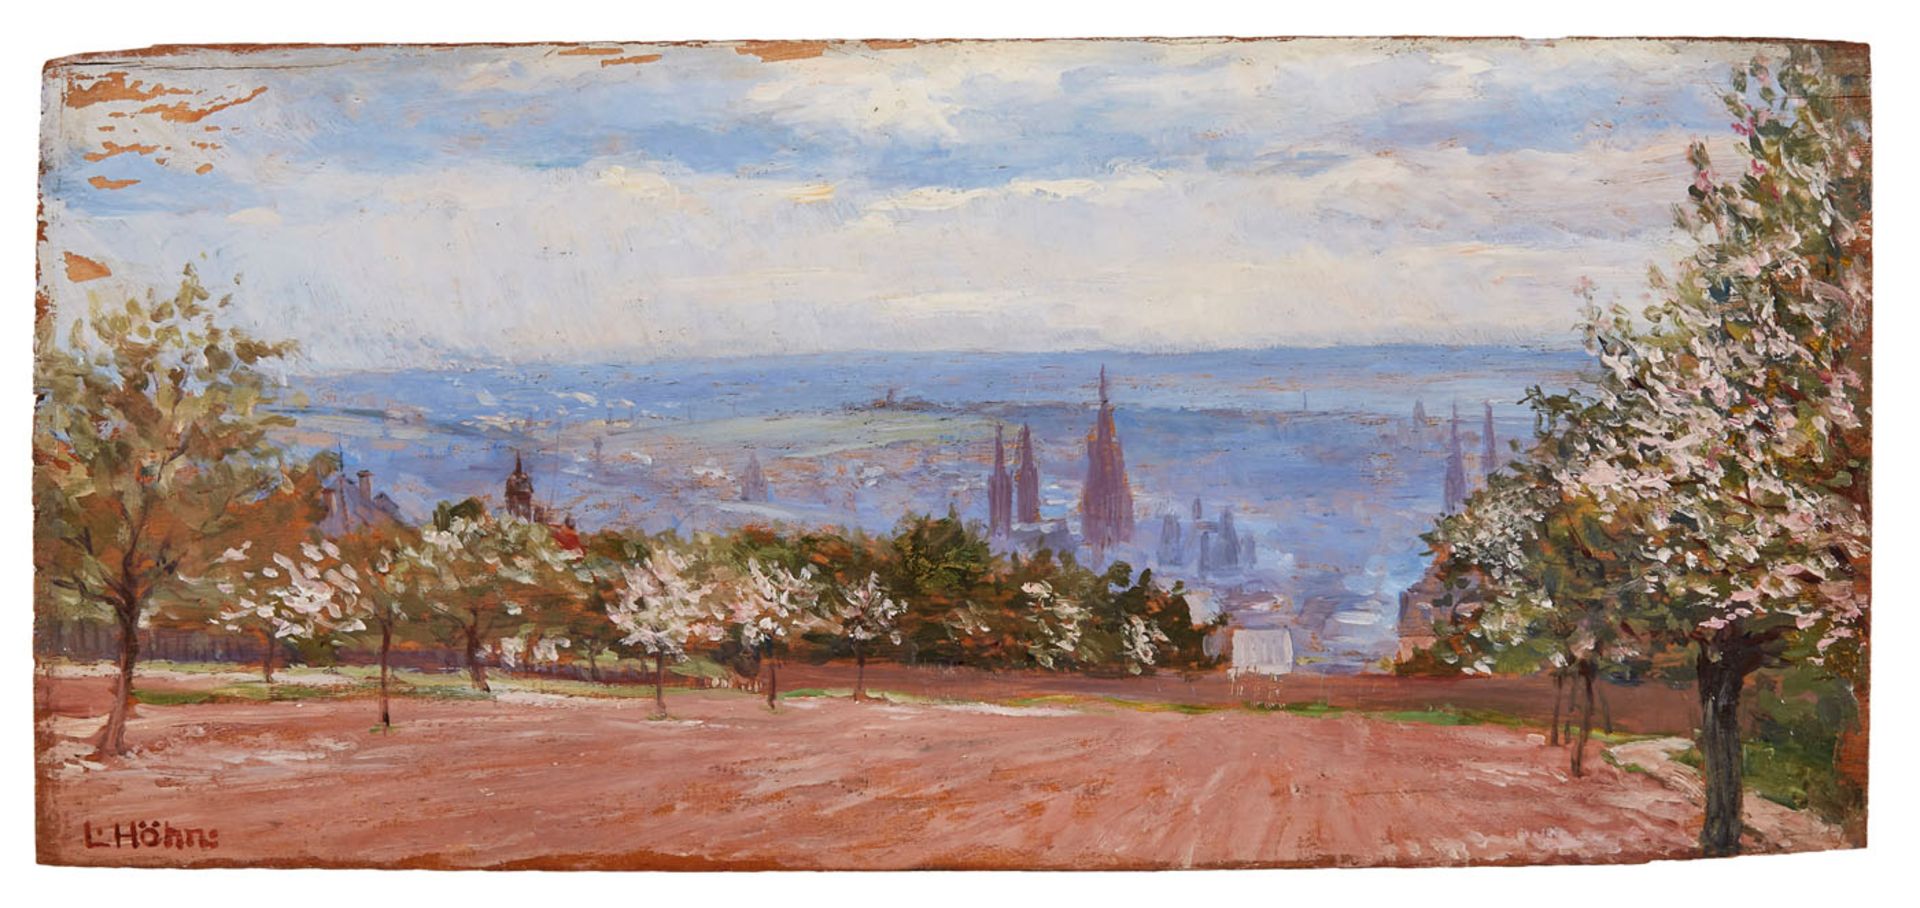 Gemälde Sign. Louis HöhnsLandschaftsmaler um 1910. "Blick auf Wiesbaden vom Hof Geisberg" u. li.